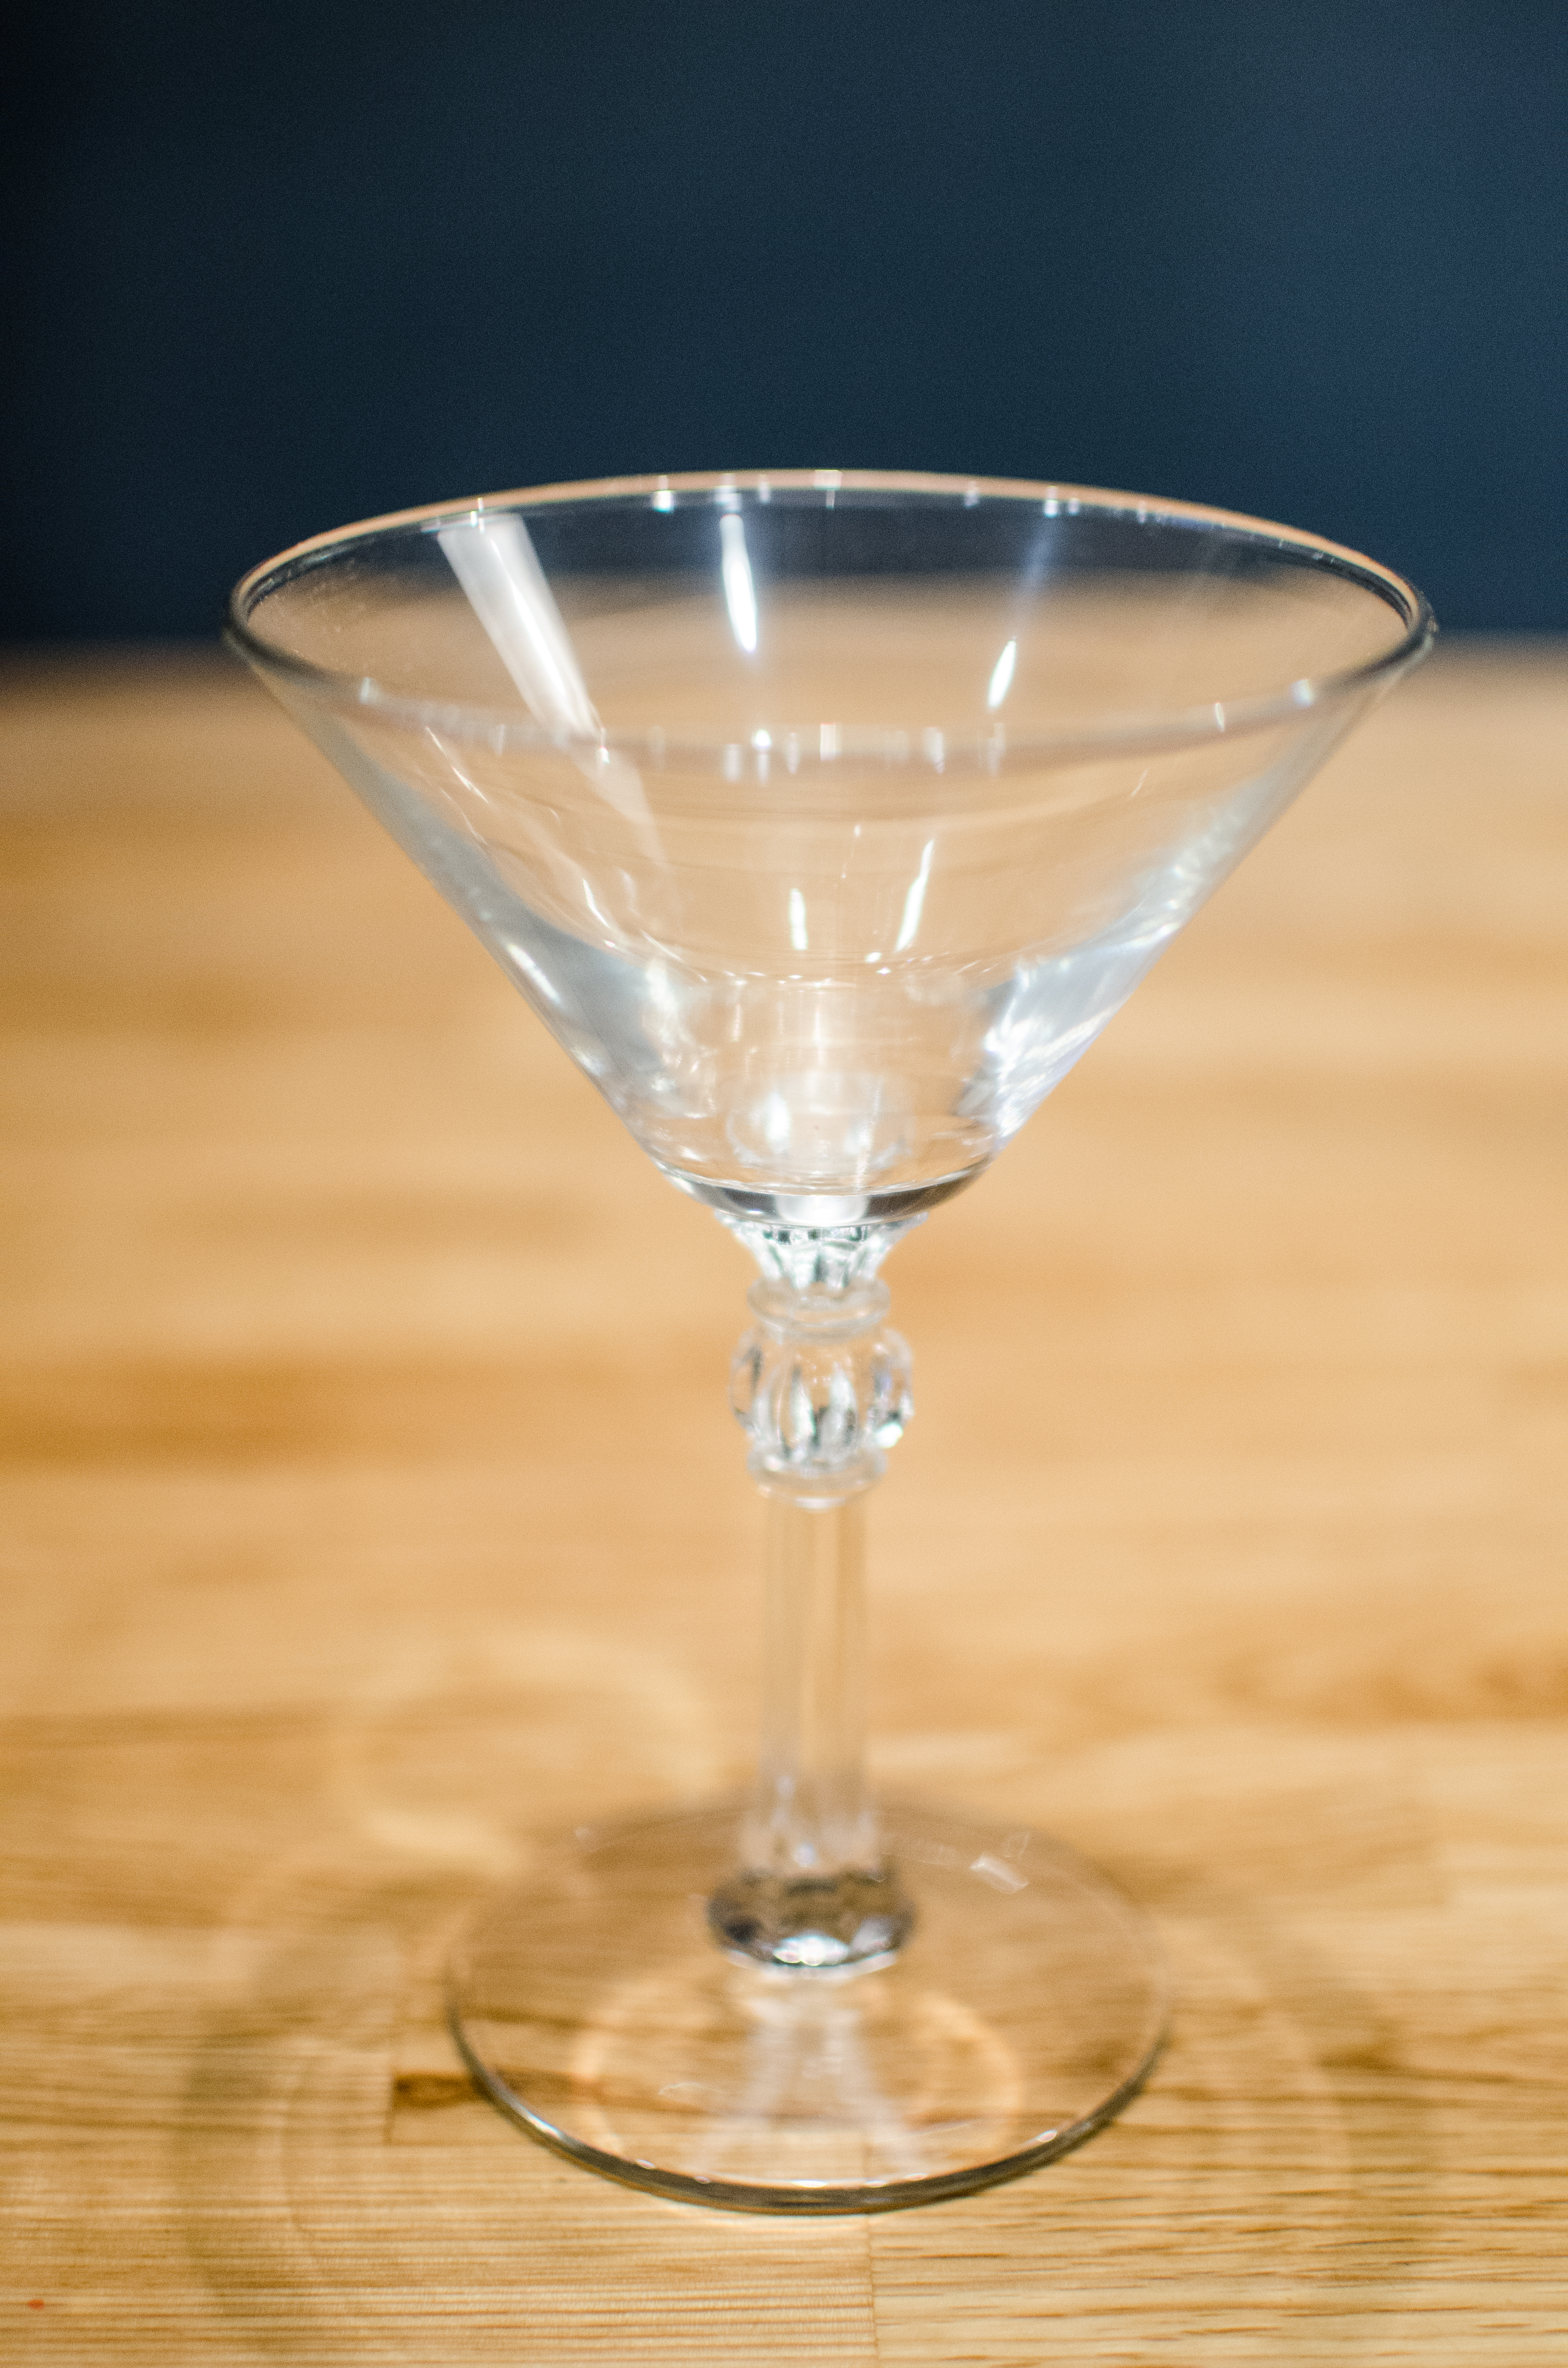 Boston Shaker glassware